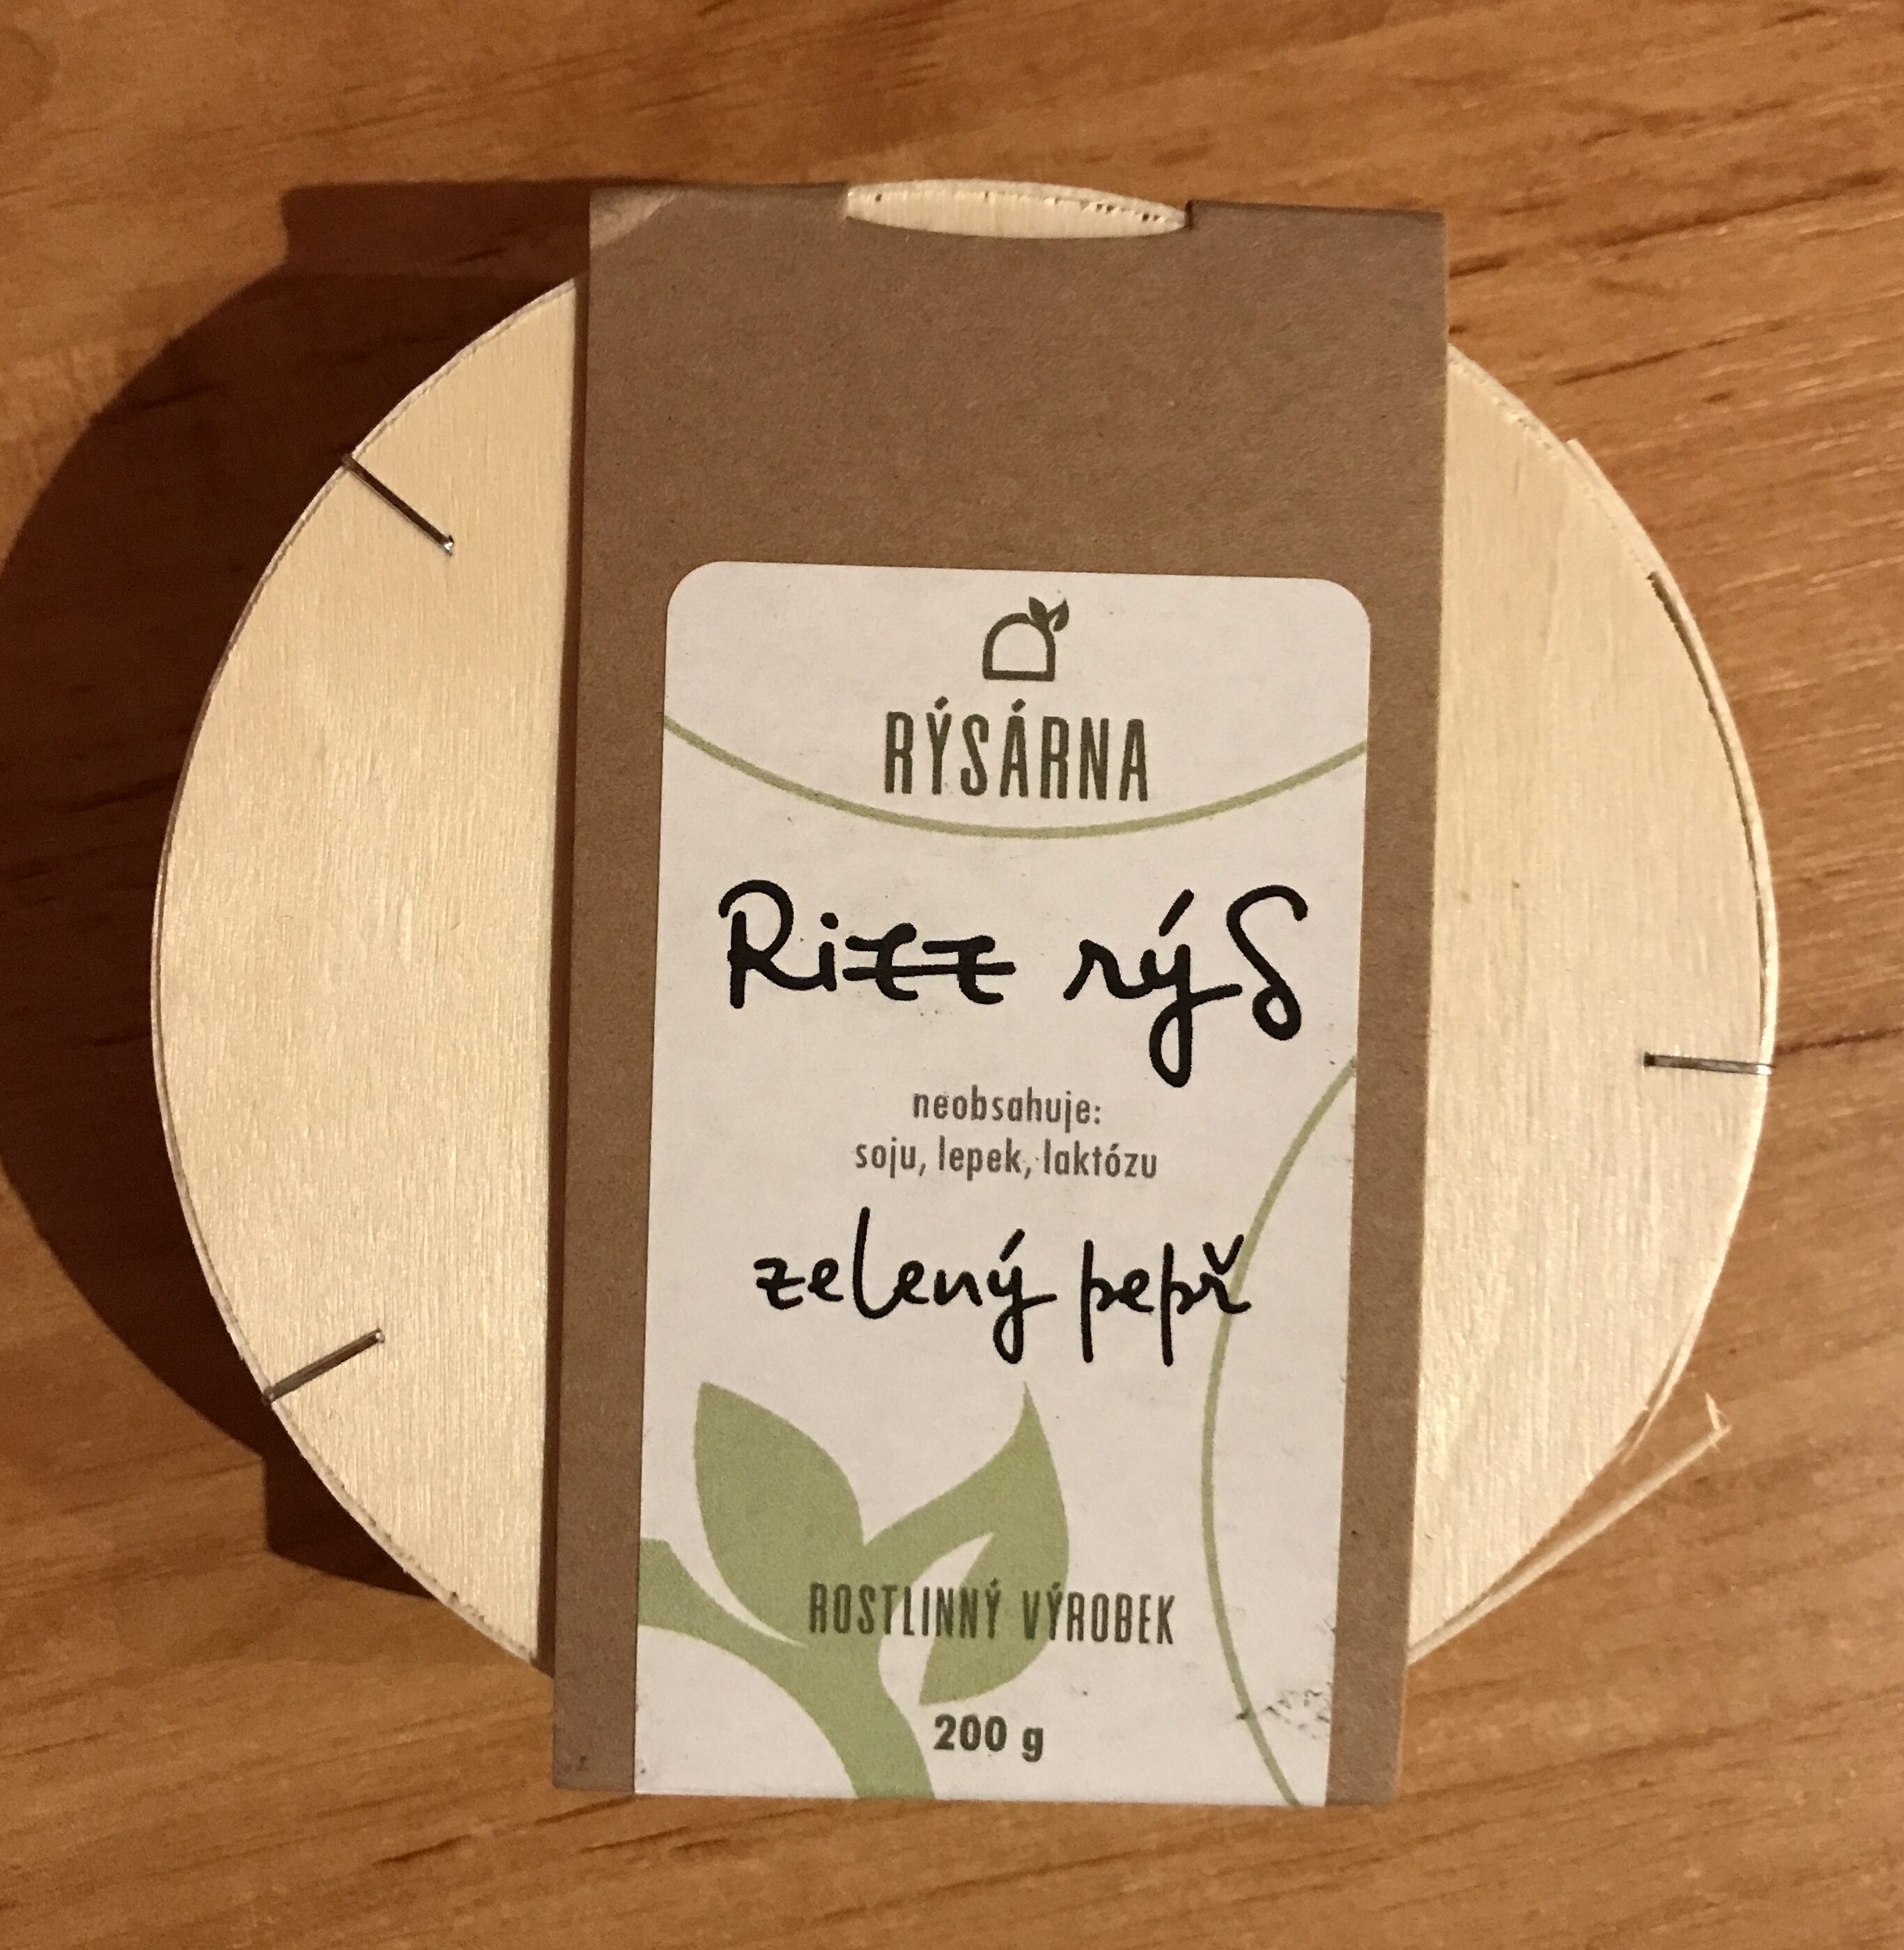 Rizz rýs zelený pepř - Produkt - cs